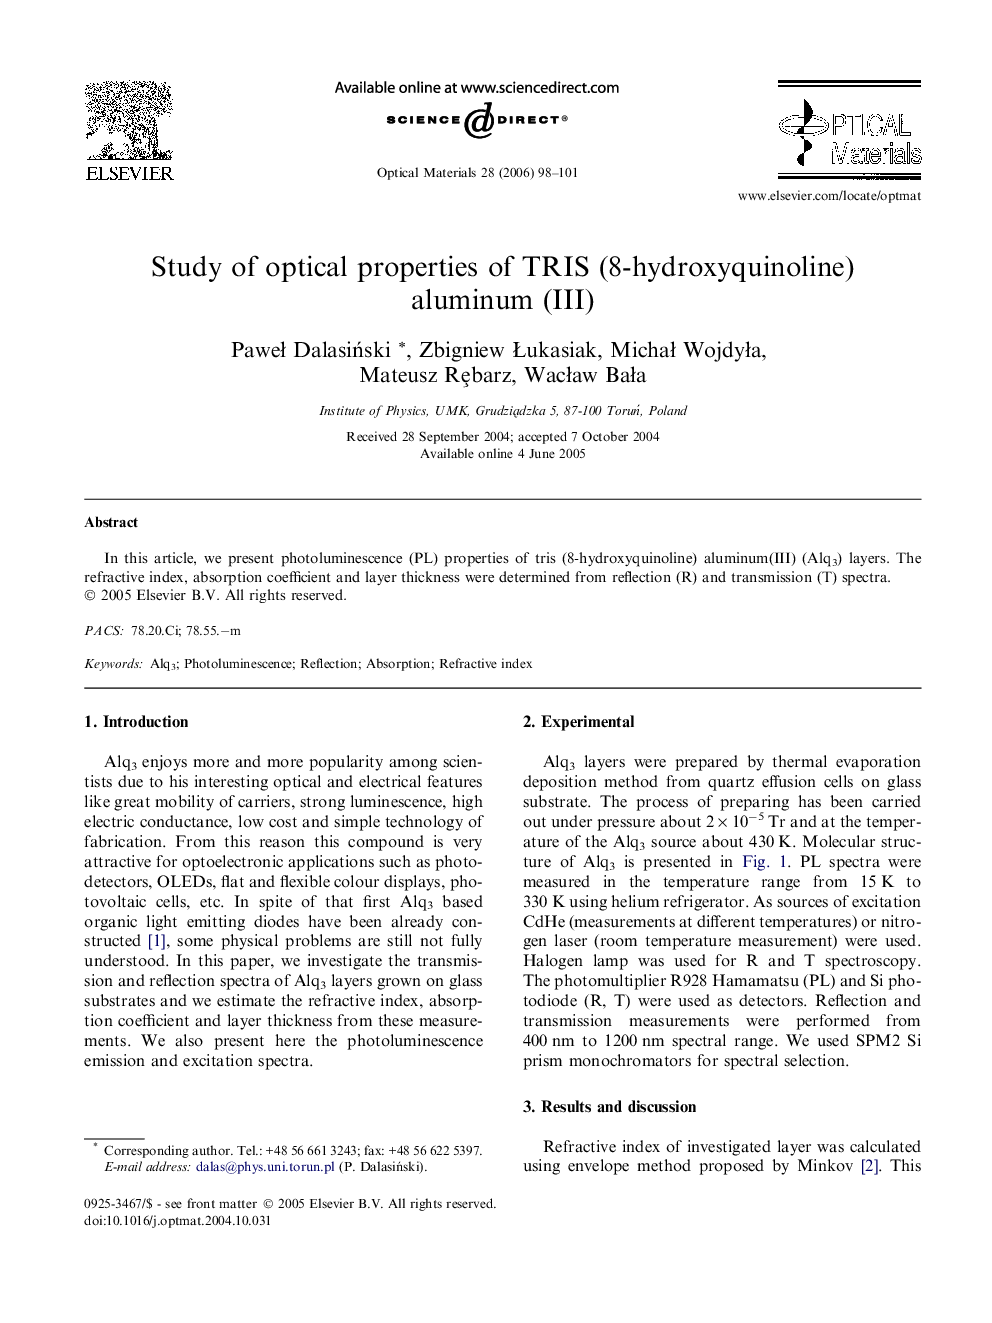 Study of optical properties of TRIS (8-hydroxyquinoline) aluminum (III)